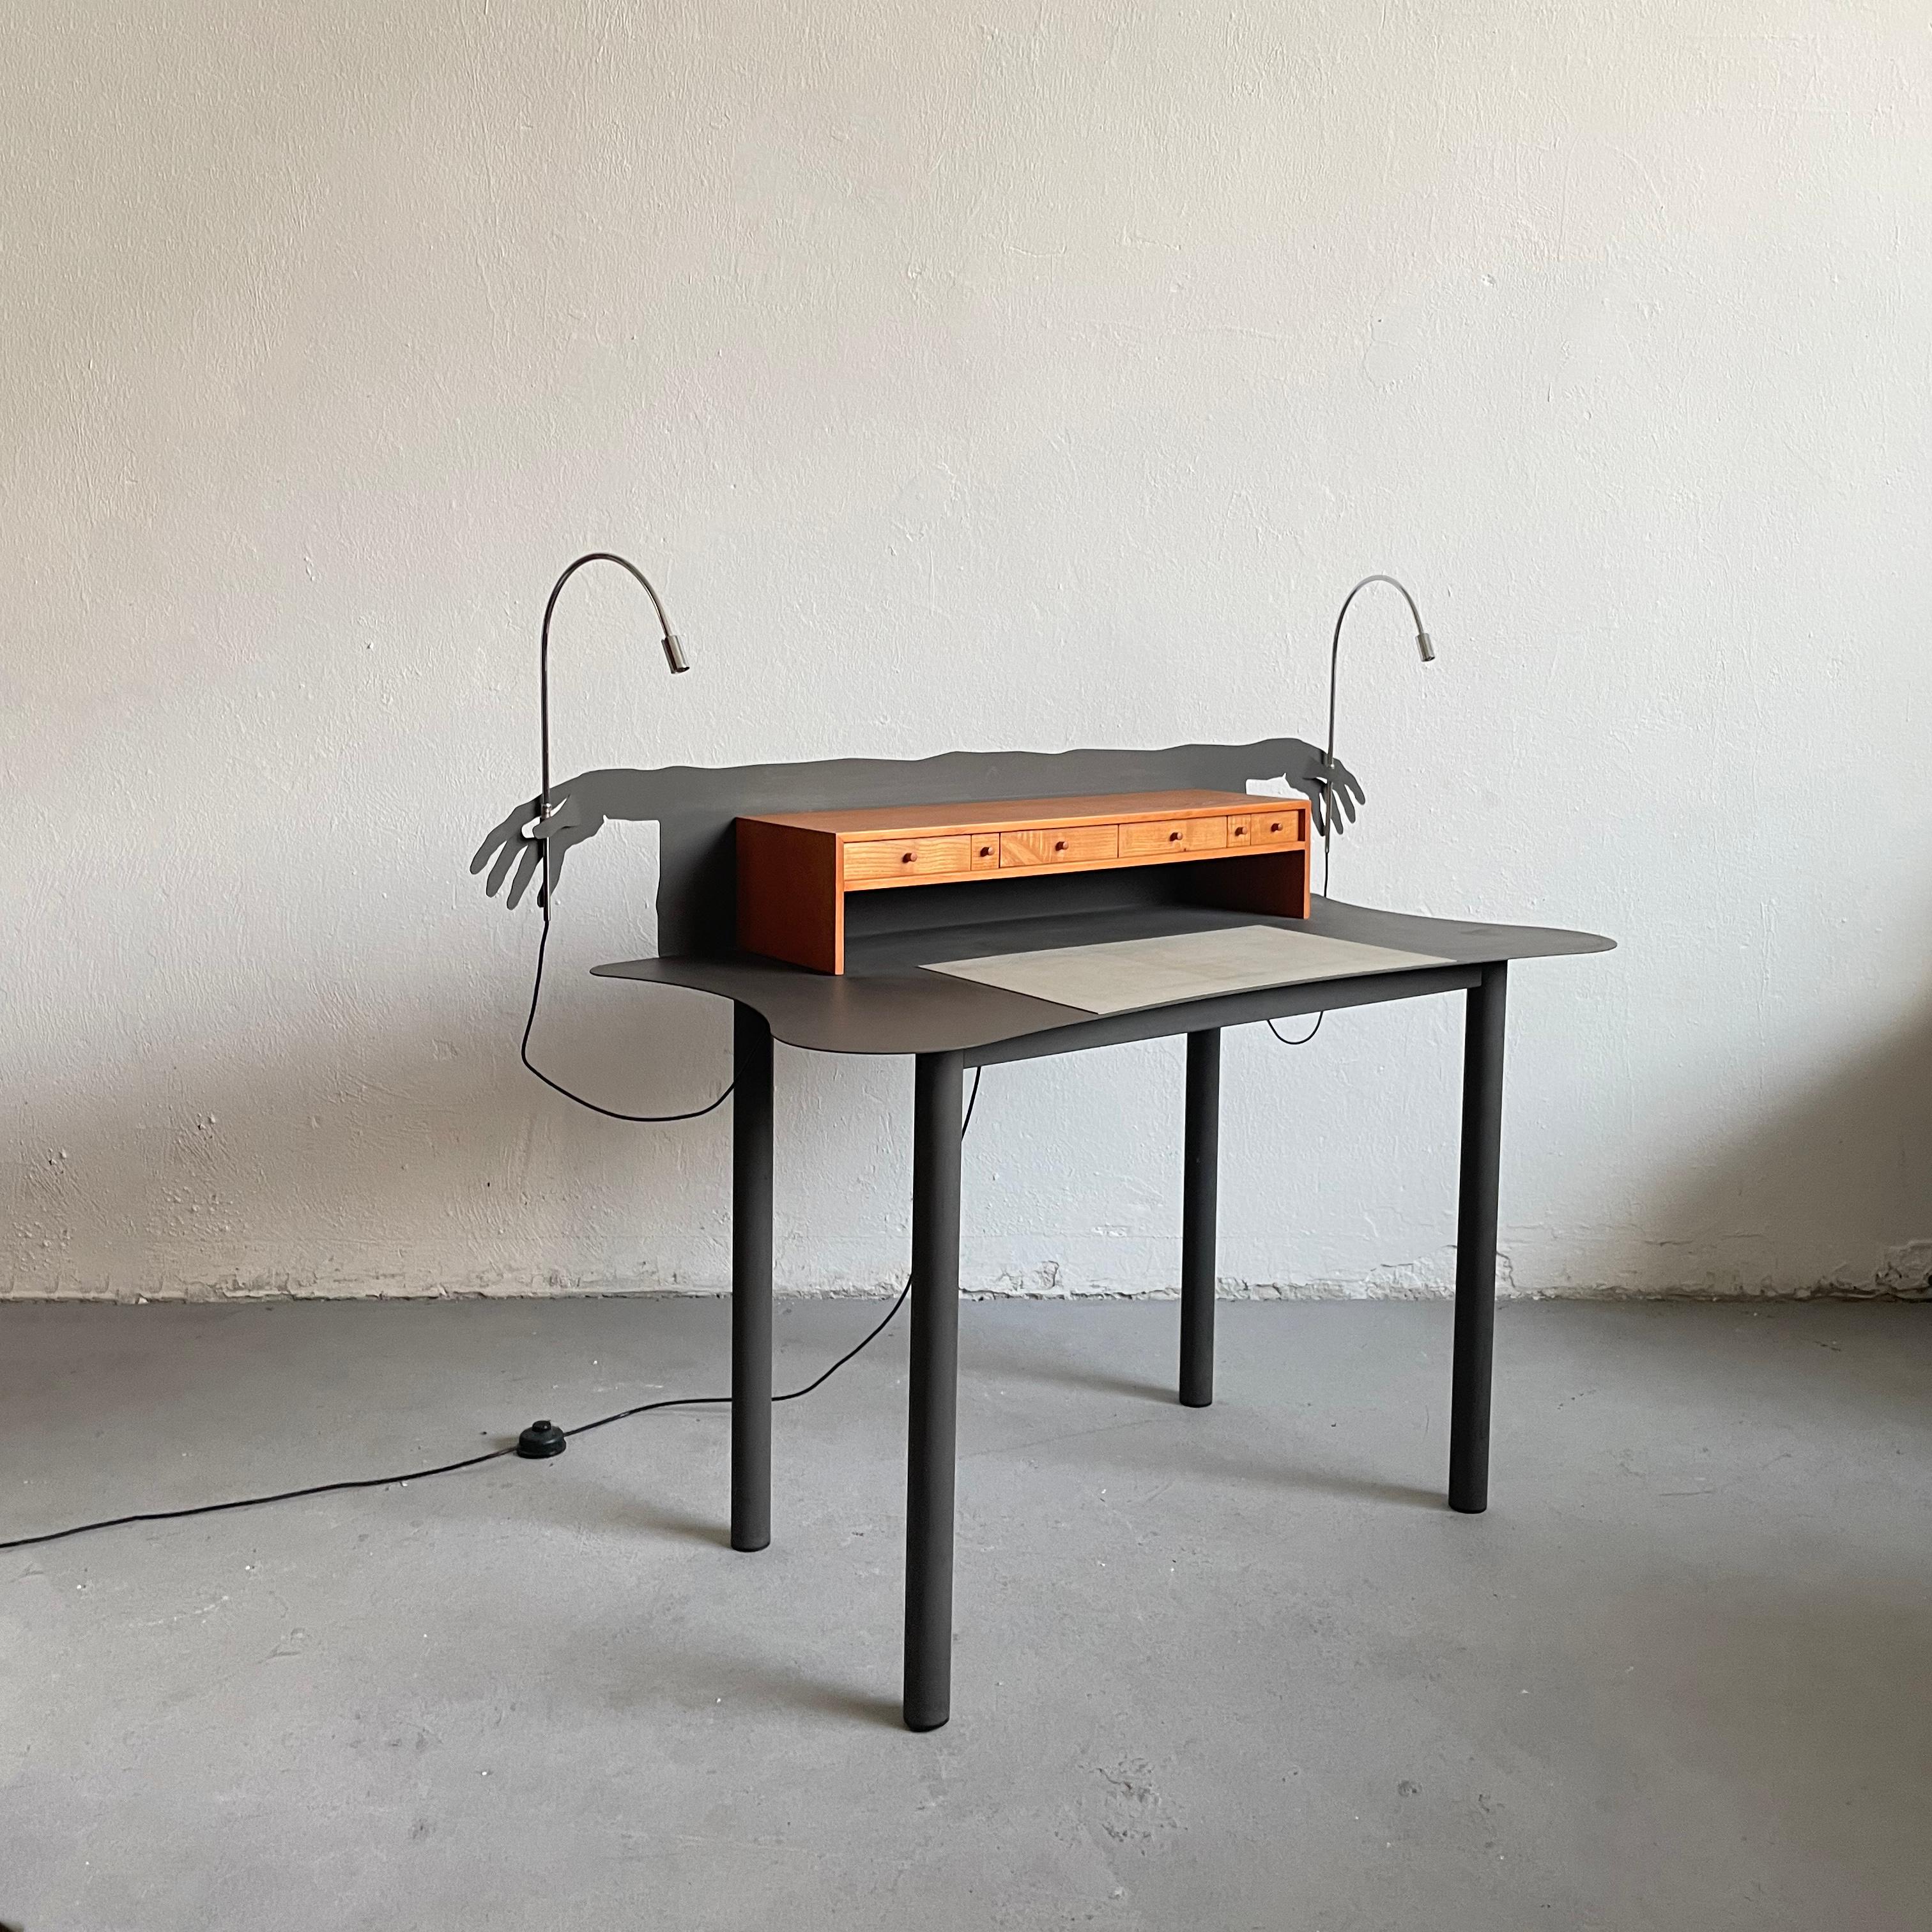 Steel Secretary Desk ‘Entremanos’ by Spanish Artist Andrés Nagel for Akaba, 1988 Spain For Sale